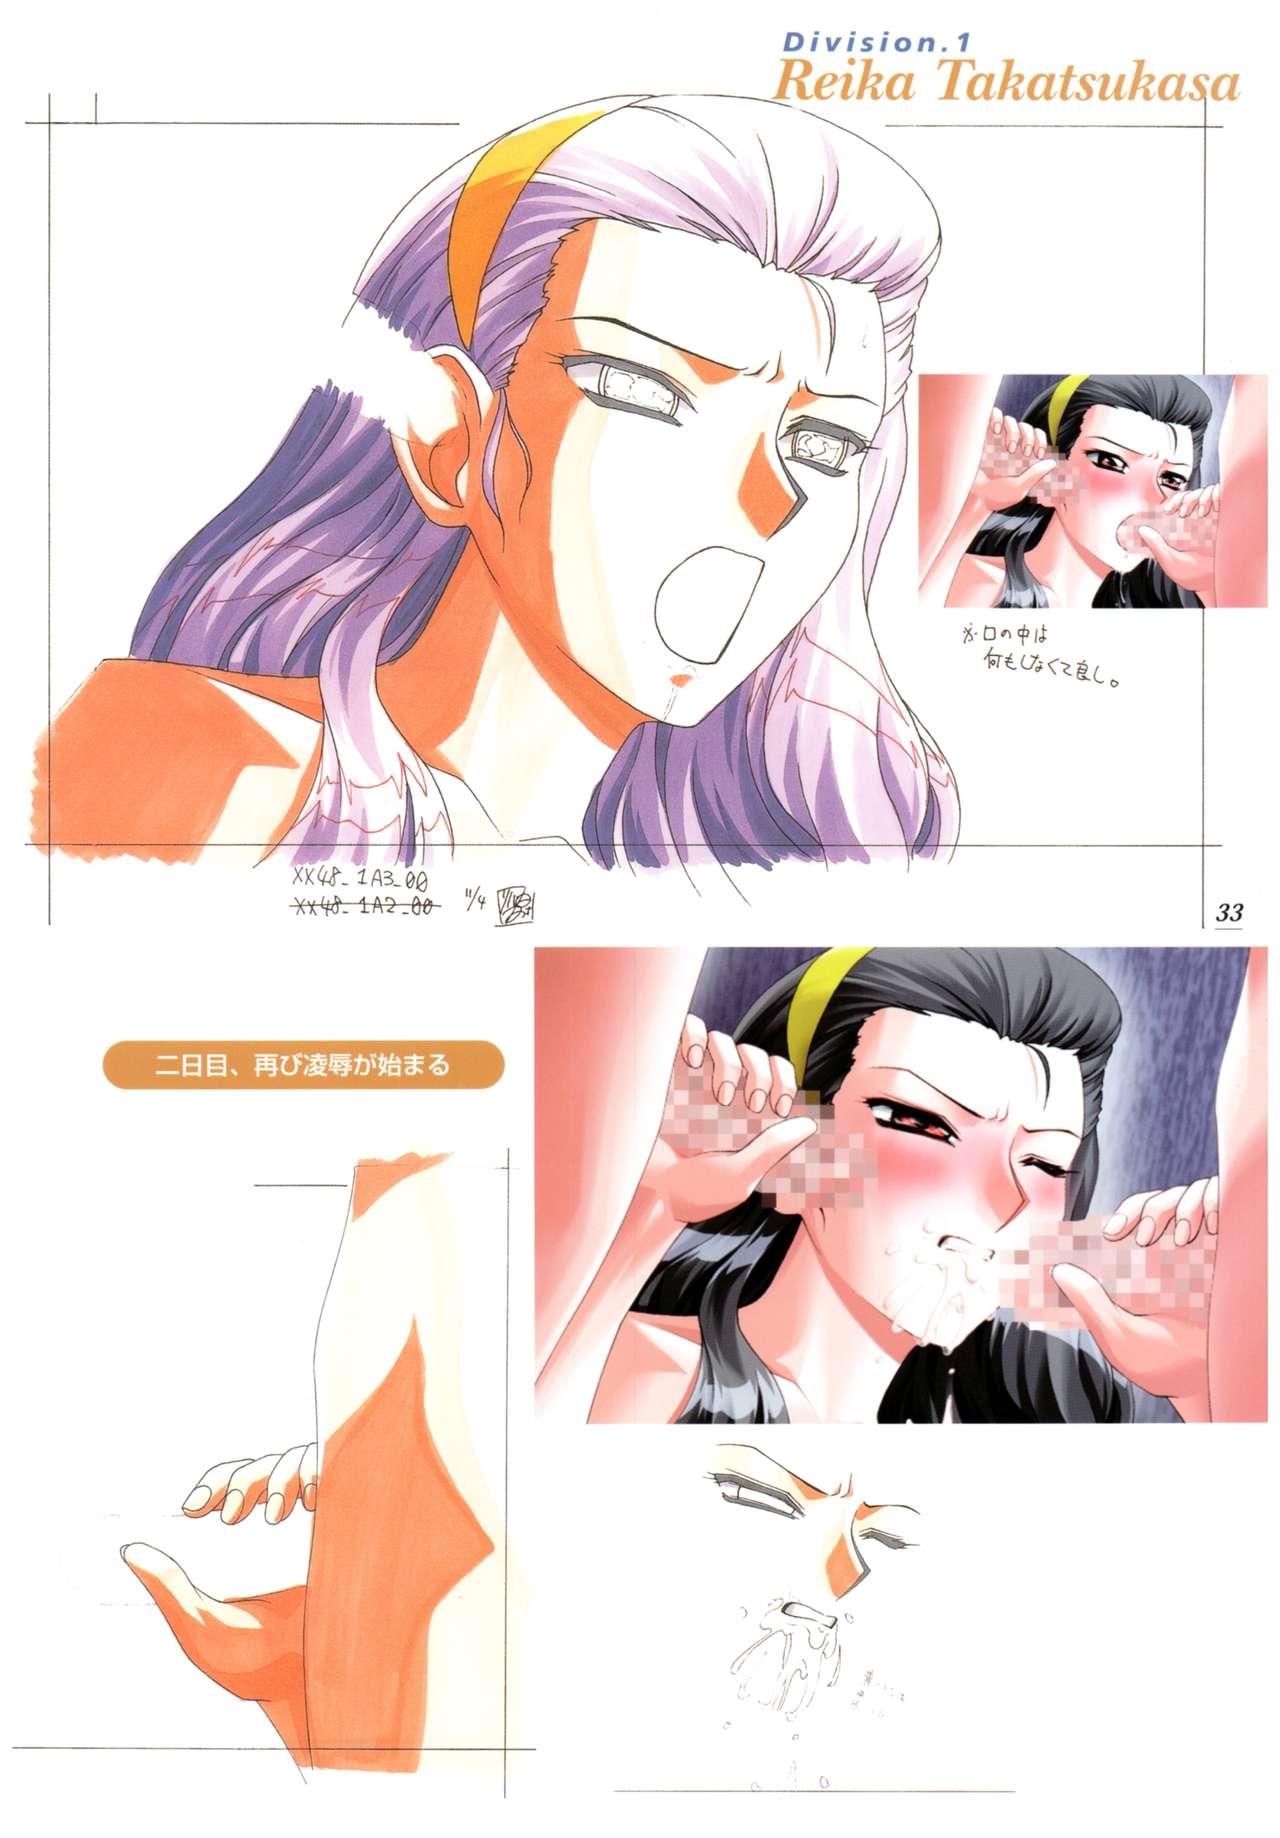 Kyouhaku Owaranai Asu original illustration art book 37